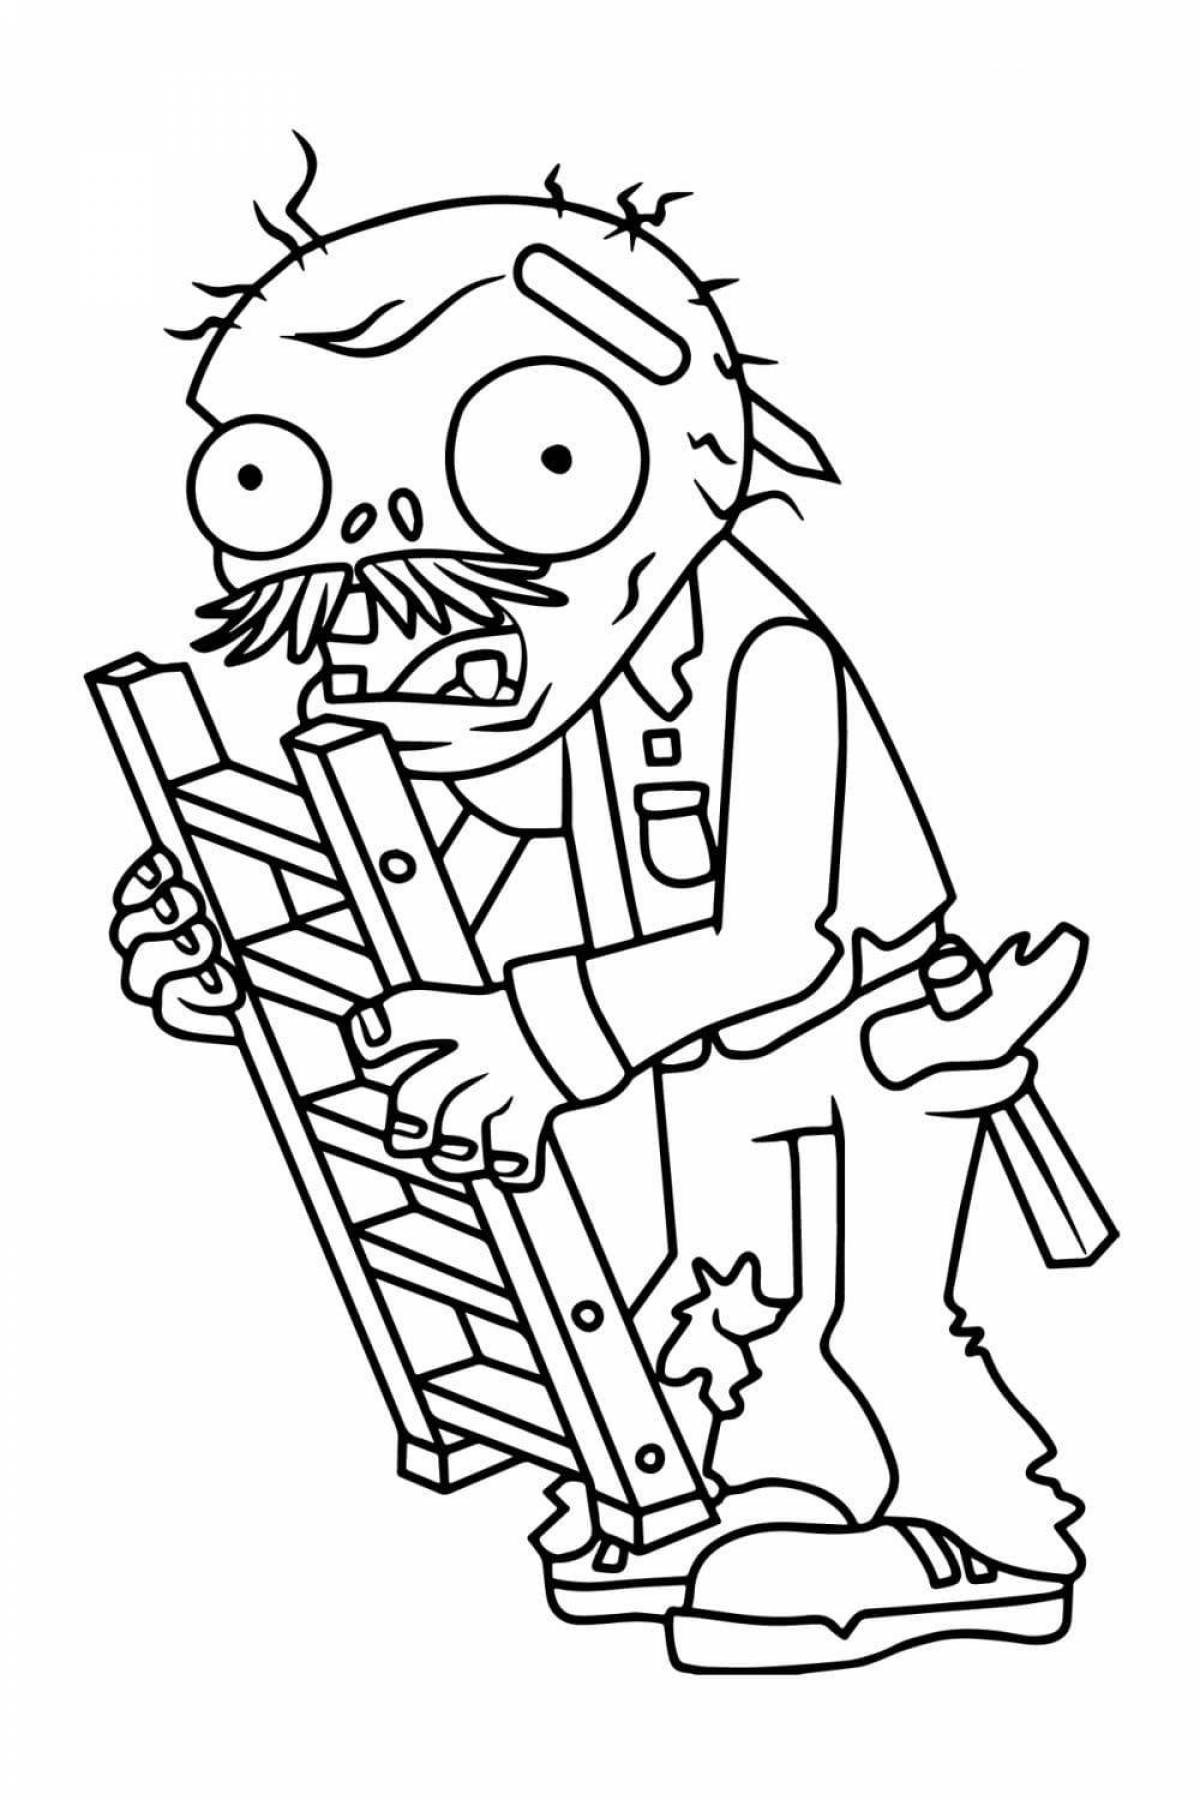 Creepy zombie coloring book